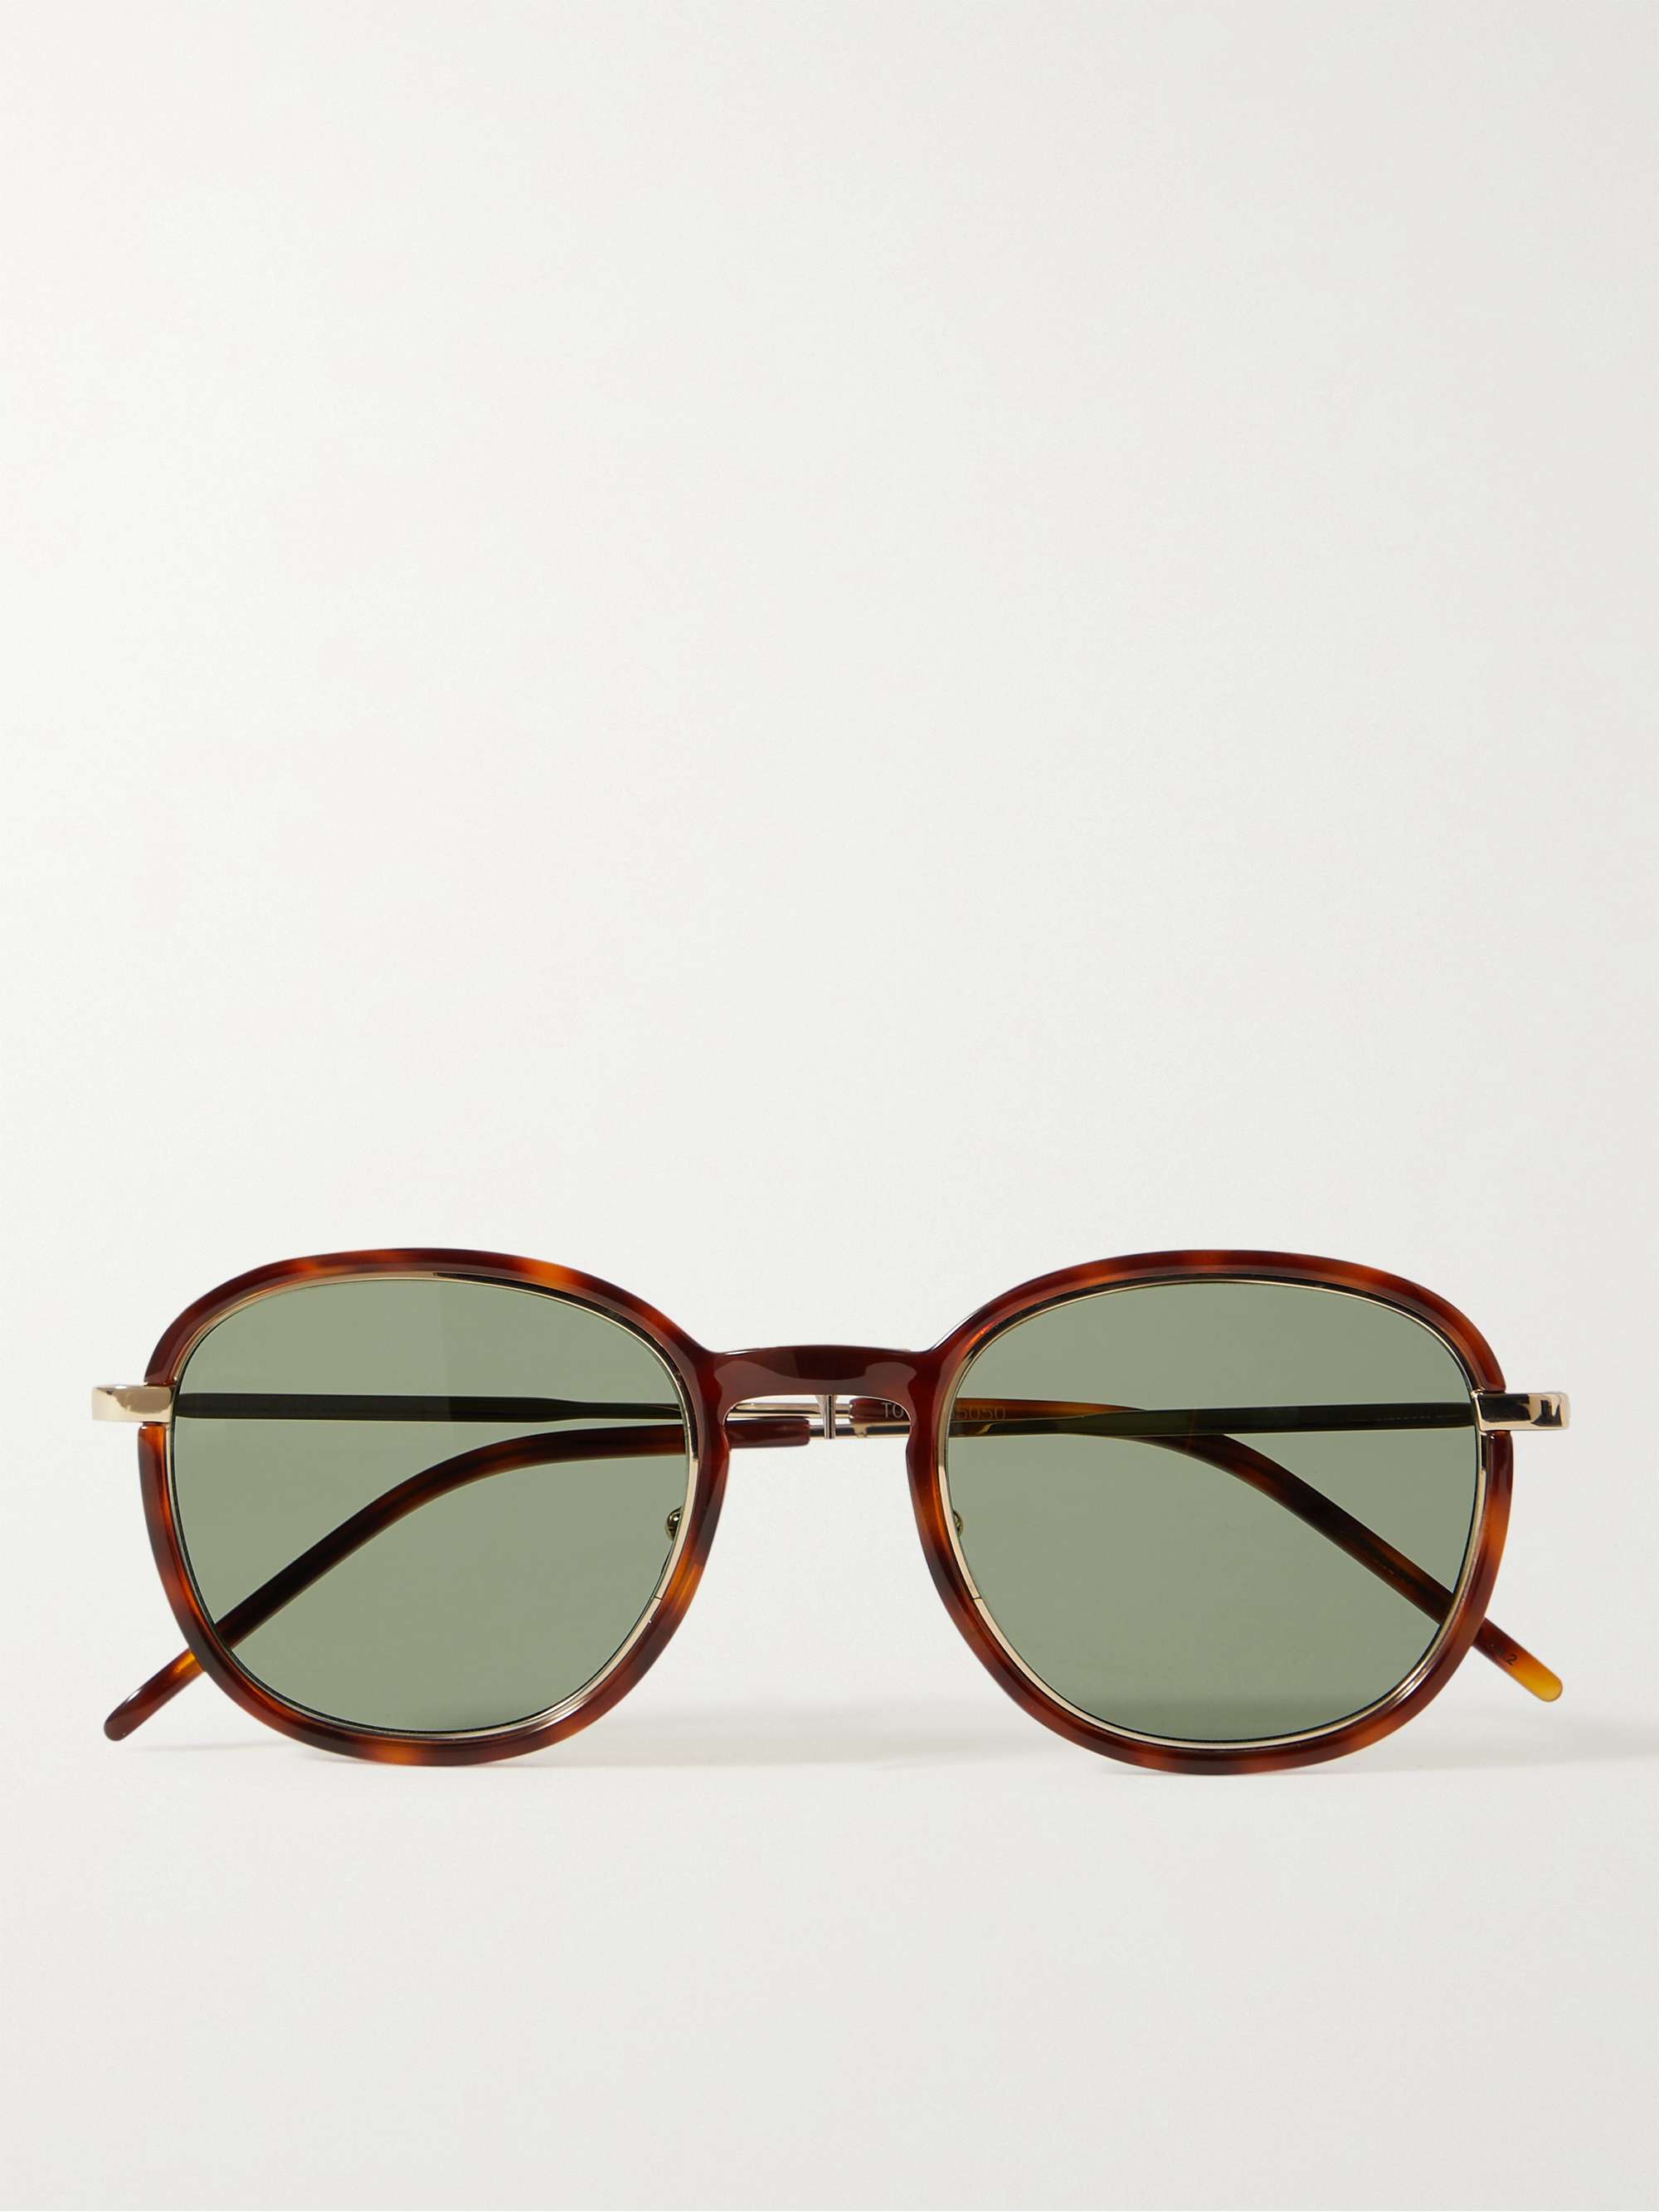 SAINT LAURENT EYEWEAR Round-Frame Acetate and Silver-Tone Sunglasses